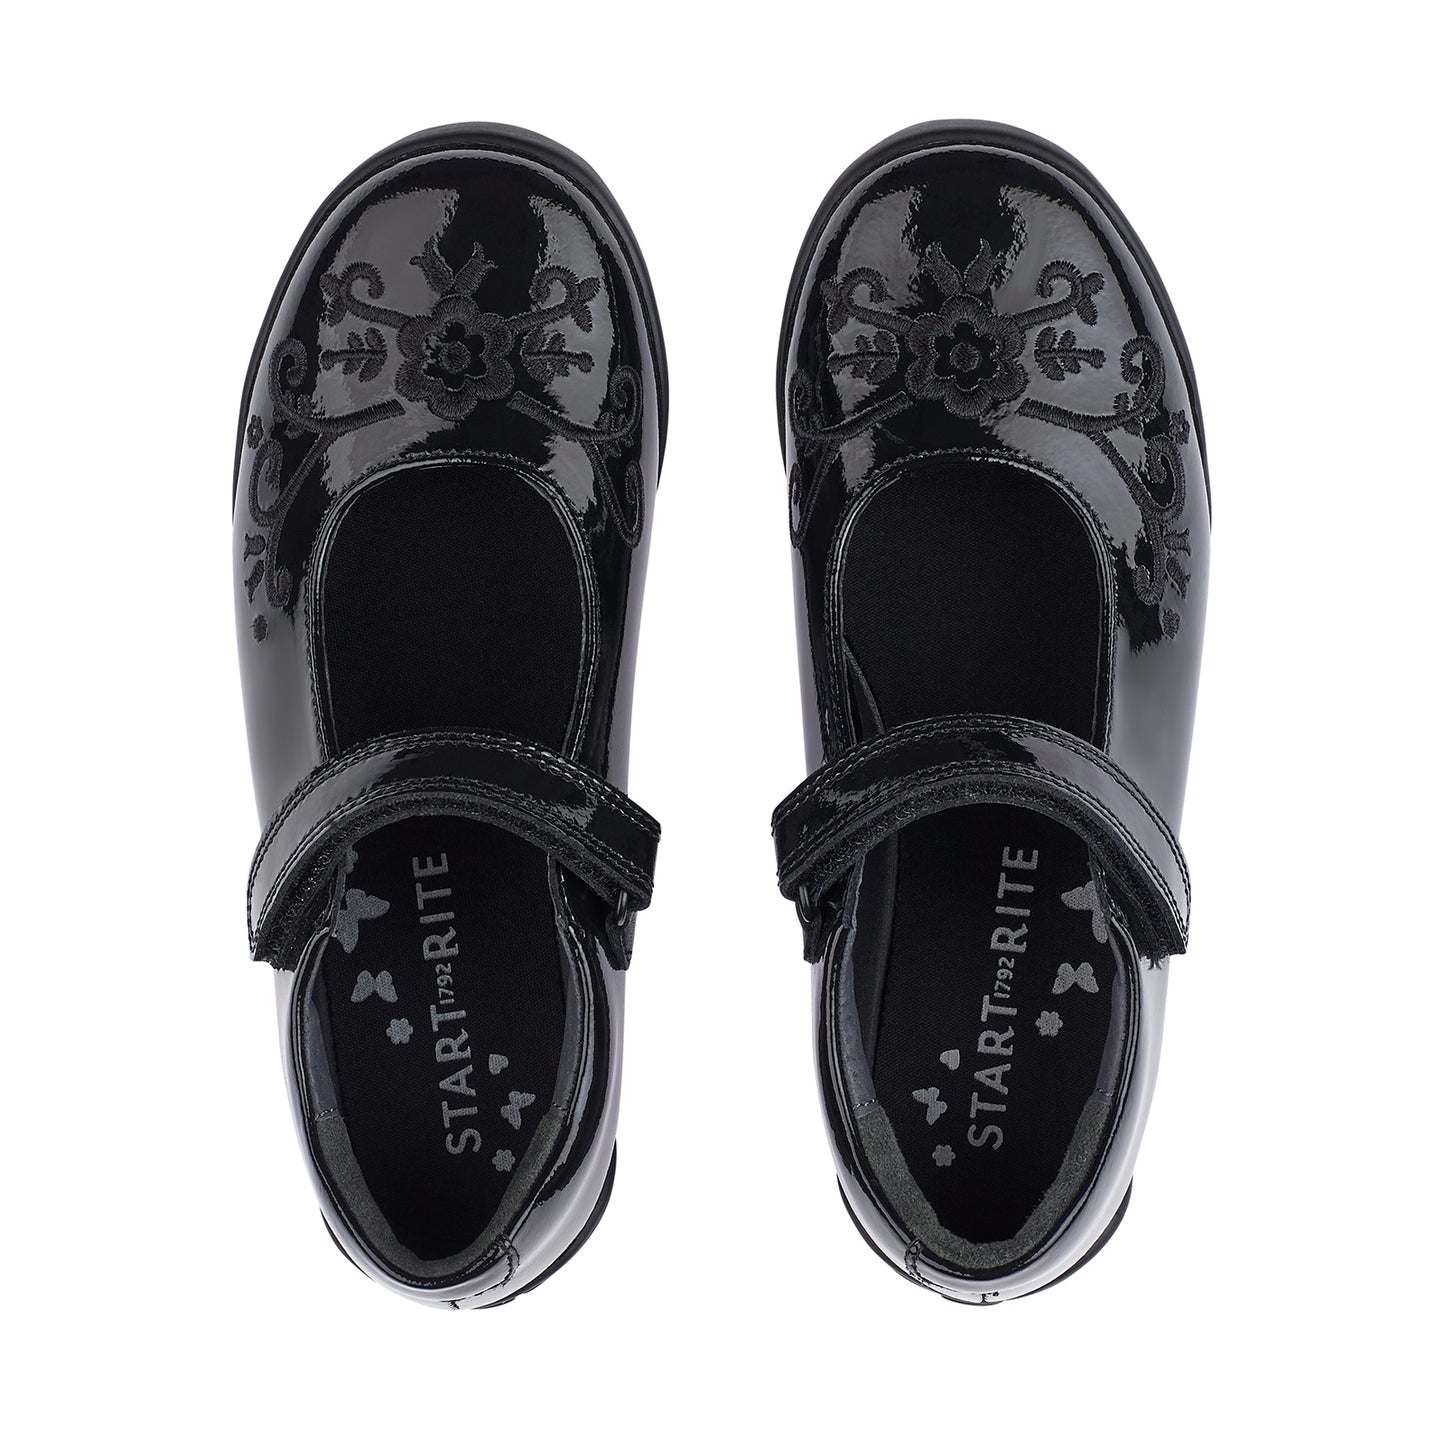 Hopscotch Black Patent Leather Girl's Mary Jane School Shoe